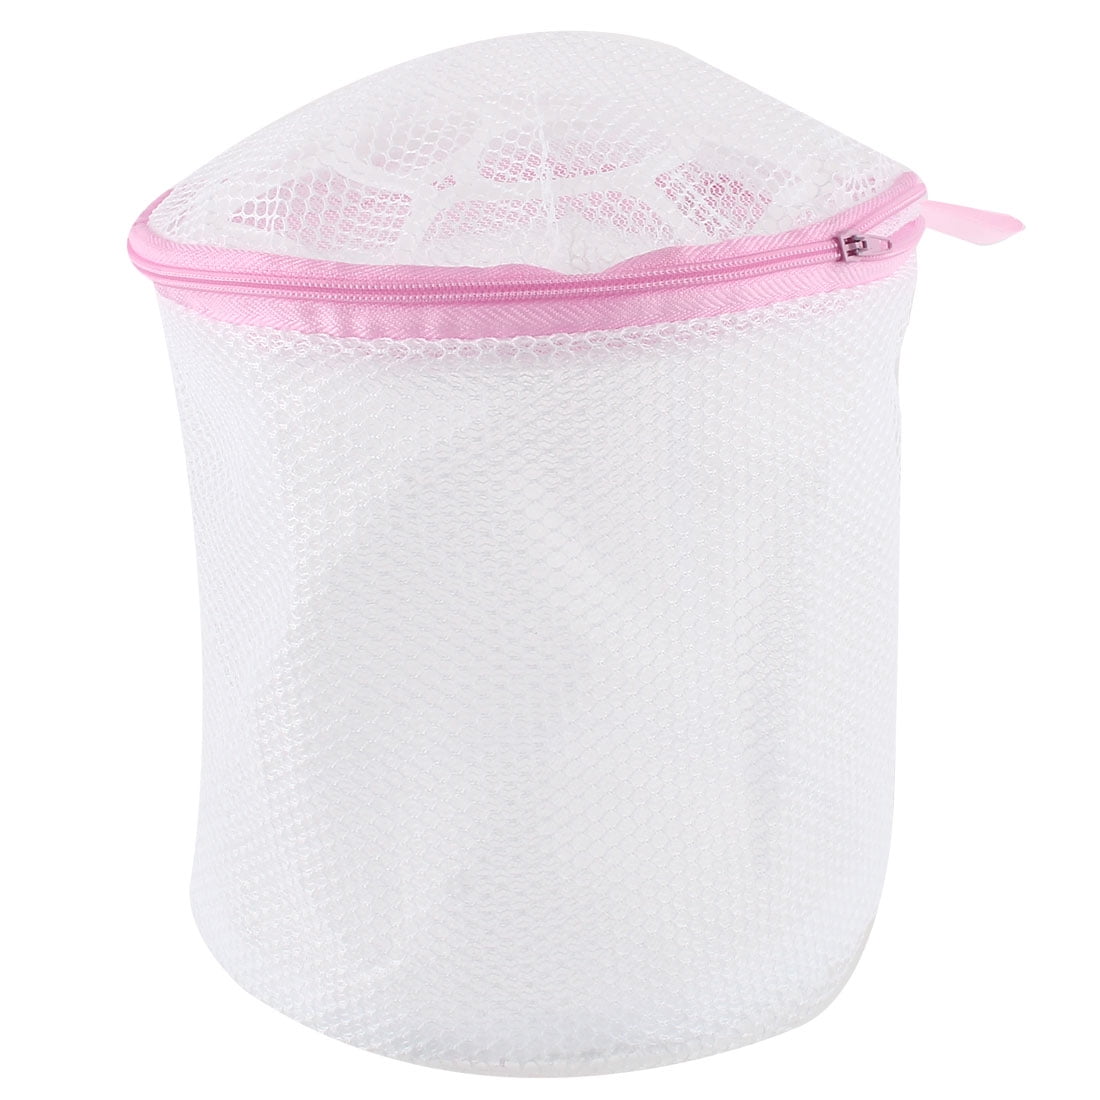 Zipped Wash Bag Laundry Washing Mesh Net Lingerie Underwear Bra Basket HOT SALE 